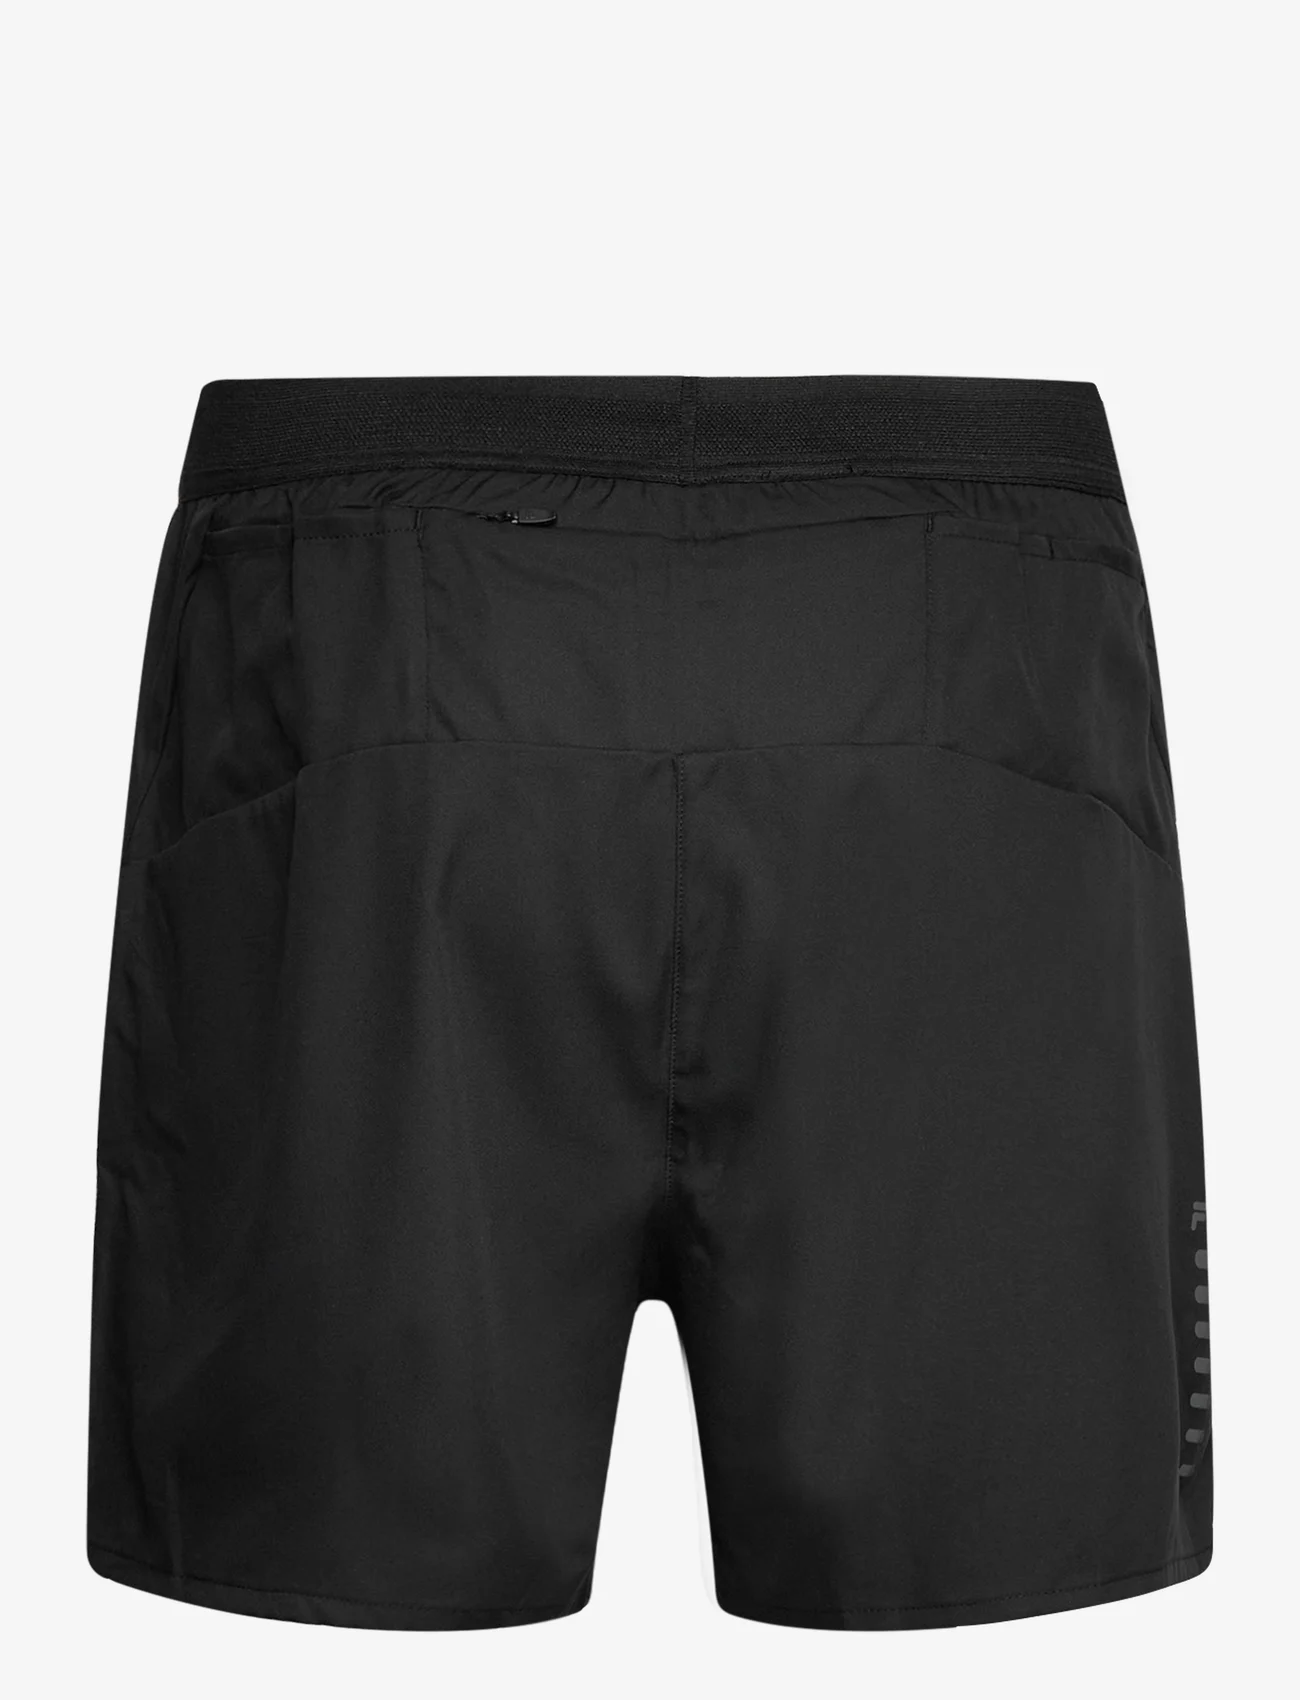 FILA - RIAZA runnig shorts with inner tights - sports shorts - black - 1